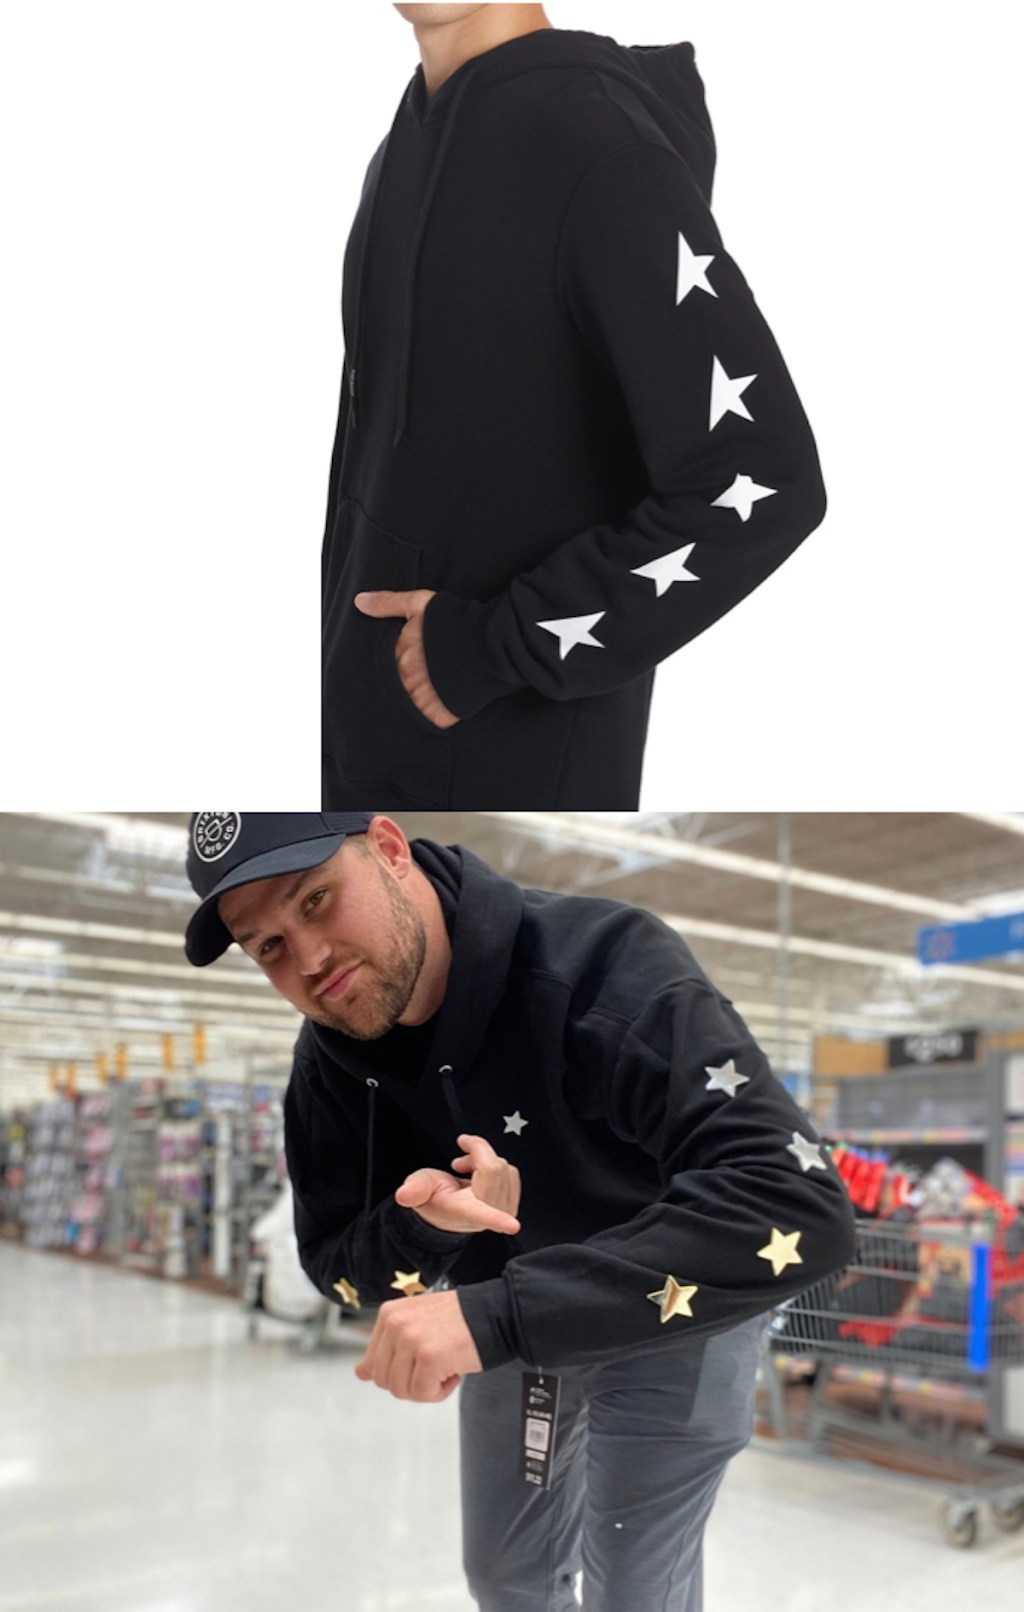 comparison of black star hoodies on man